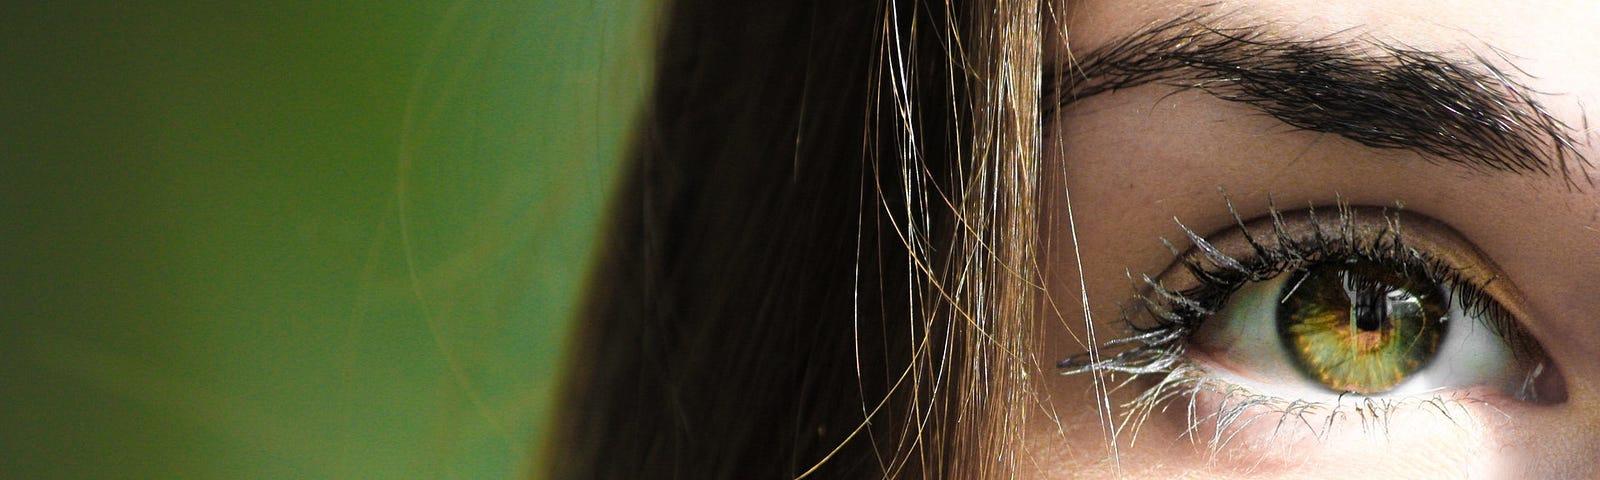 Focus half-face closeup photography of female’s green eye